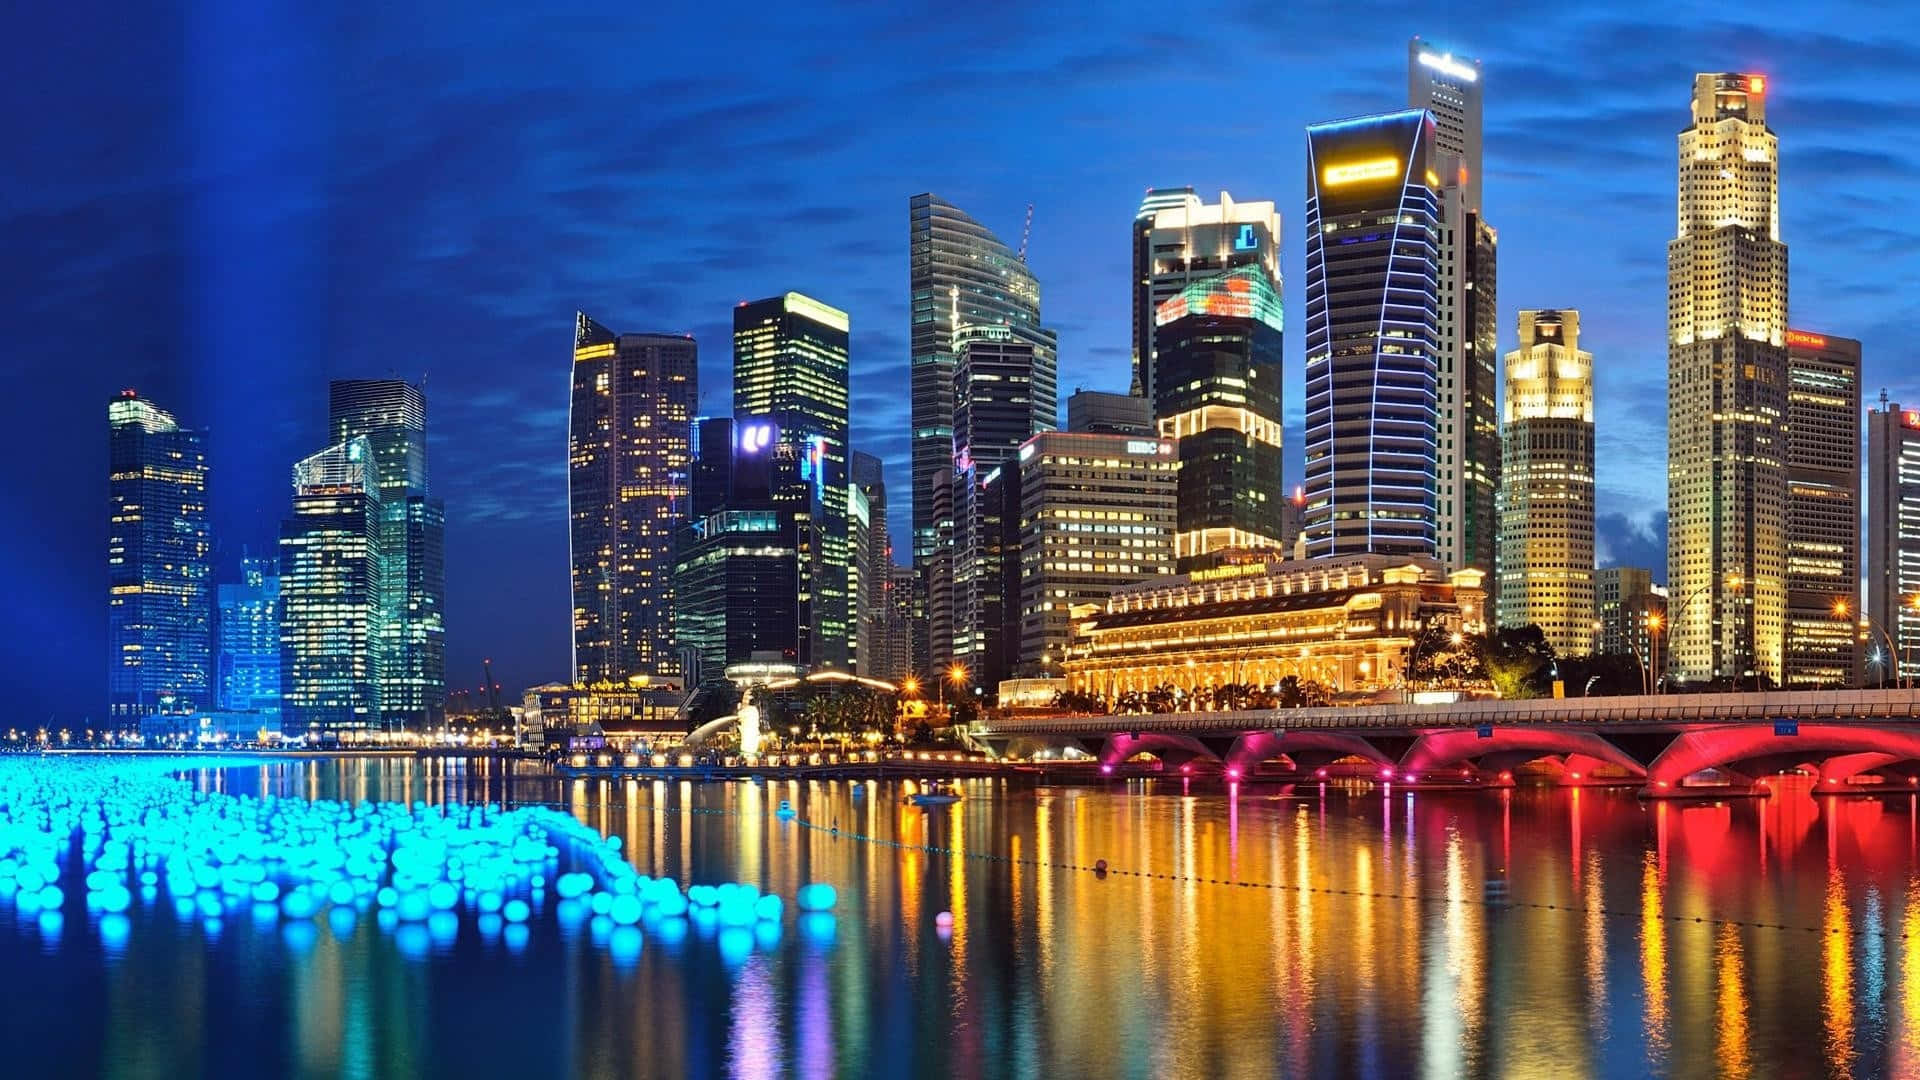 Enjoy the vibrant life of Singapore